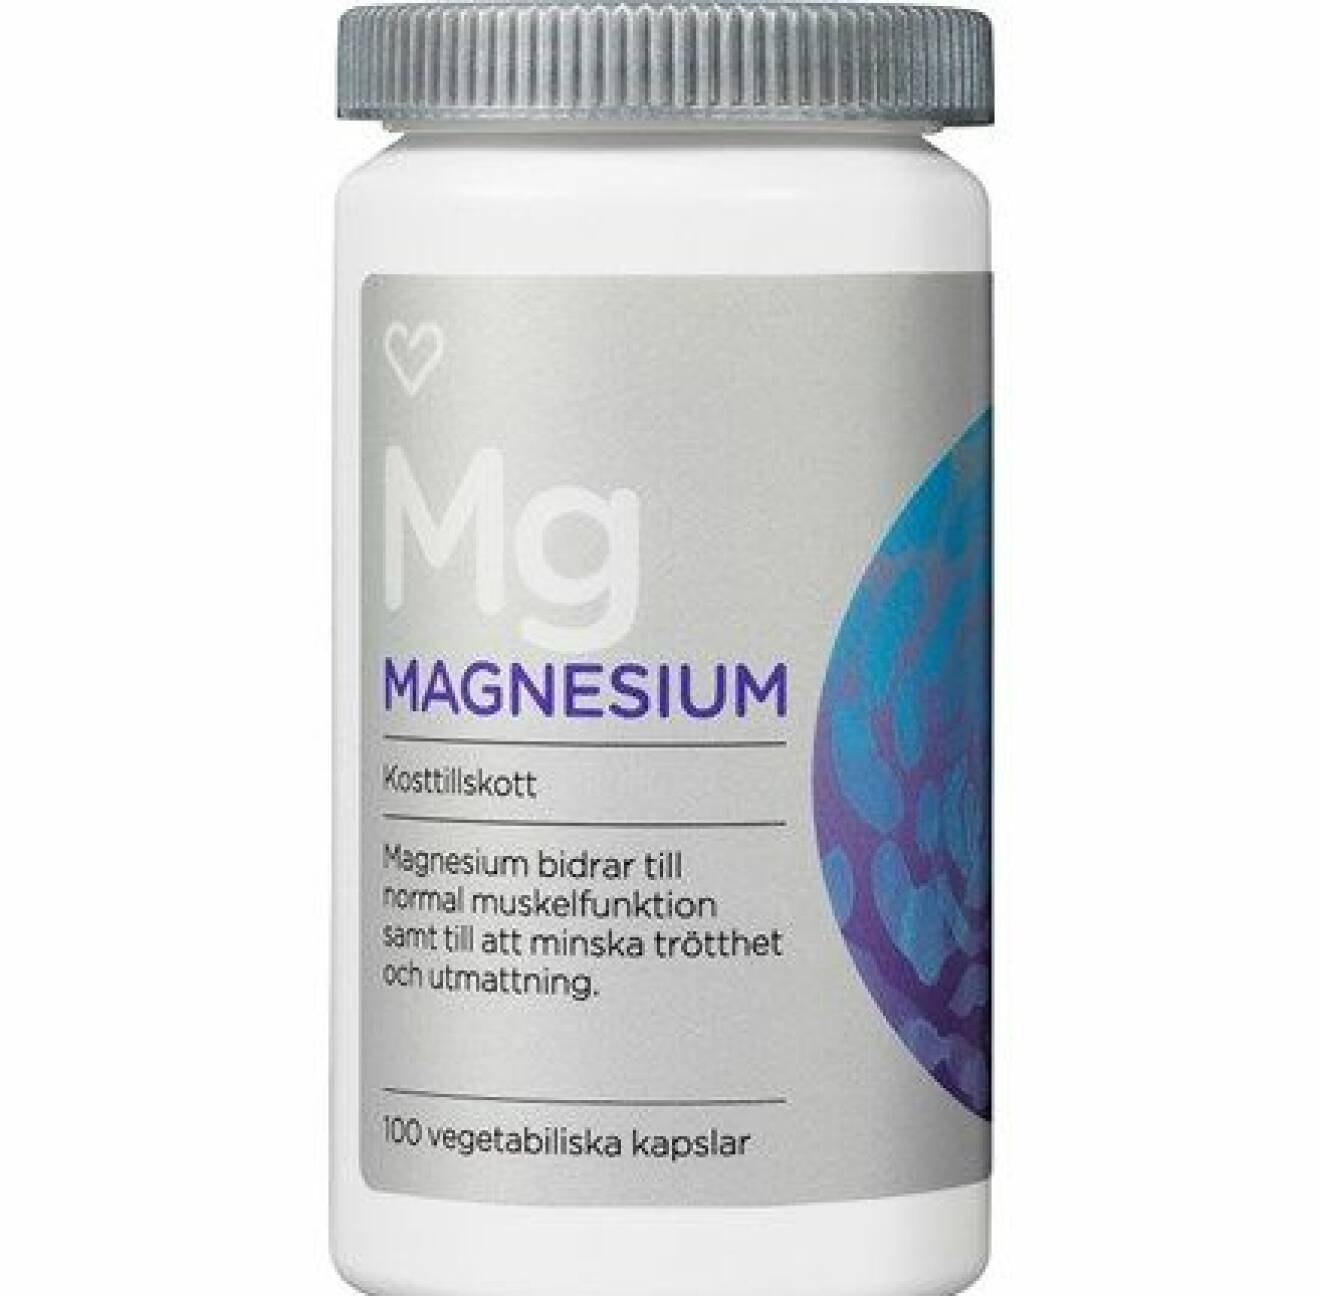 Magnesium från Apoteket, i burk.